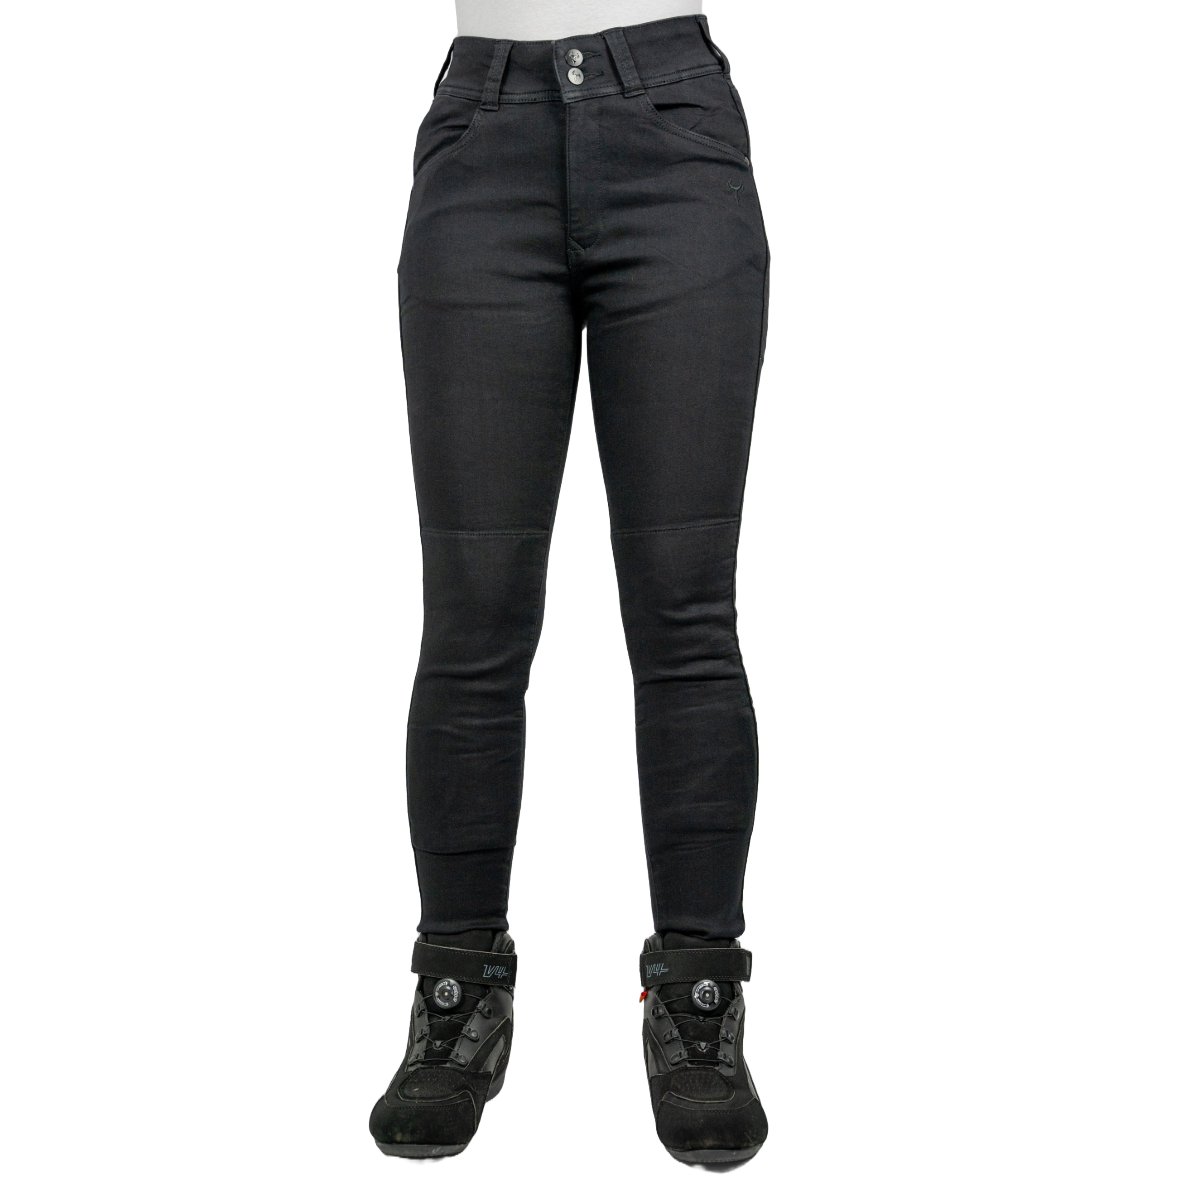 Image of Bull-it Ladies Fury Skinny Fit Short Pants Black Size 34 ID 5059684008814